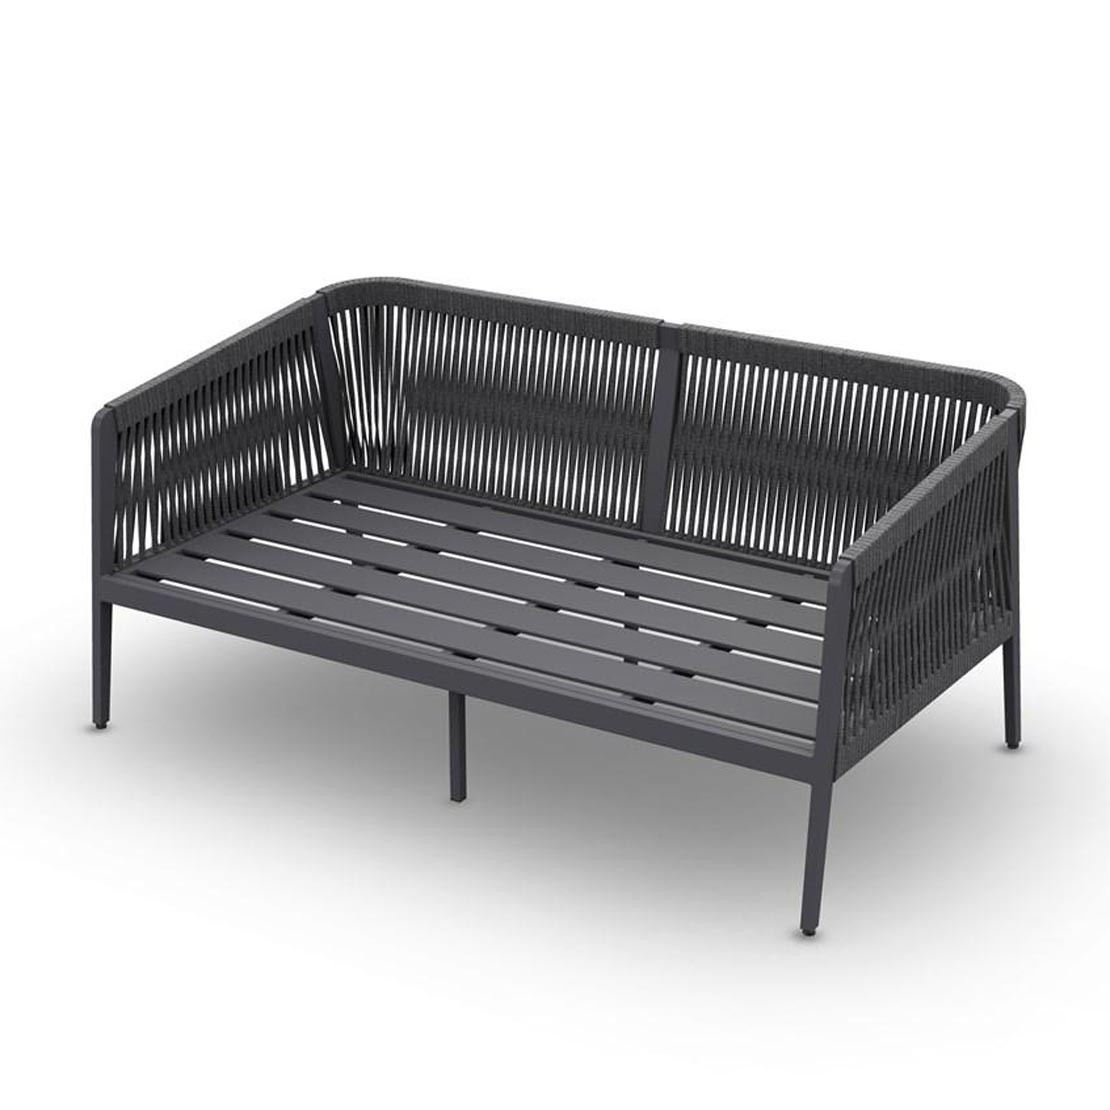 Ritz Alu Sofa 2-Seat Alu Charcoal Mat Rope Straight Weaving Charcoal Black